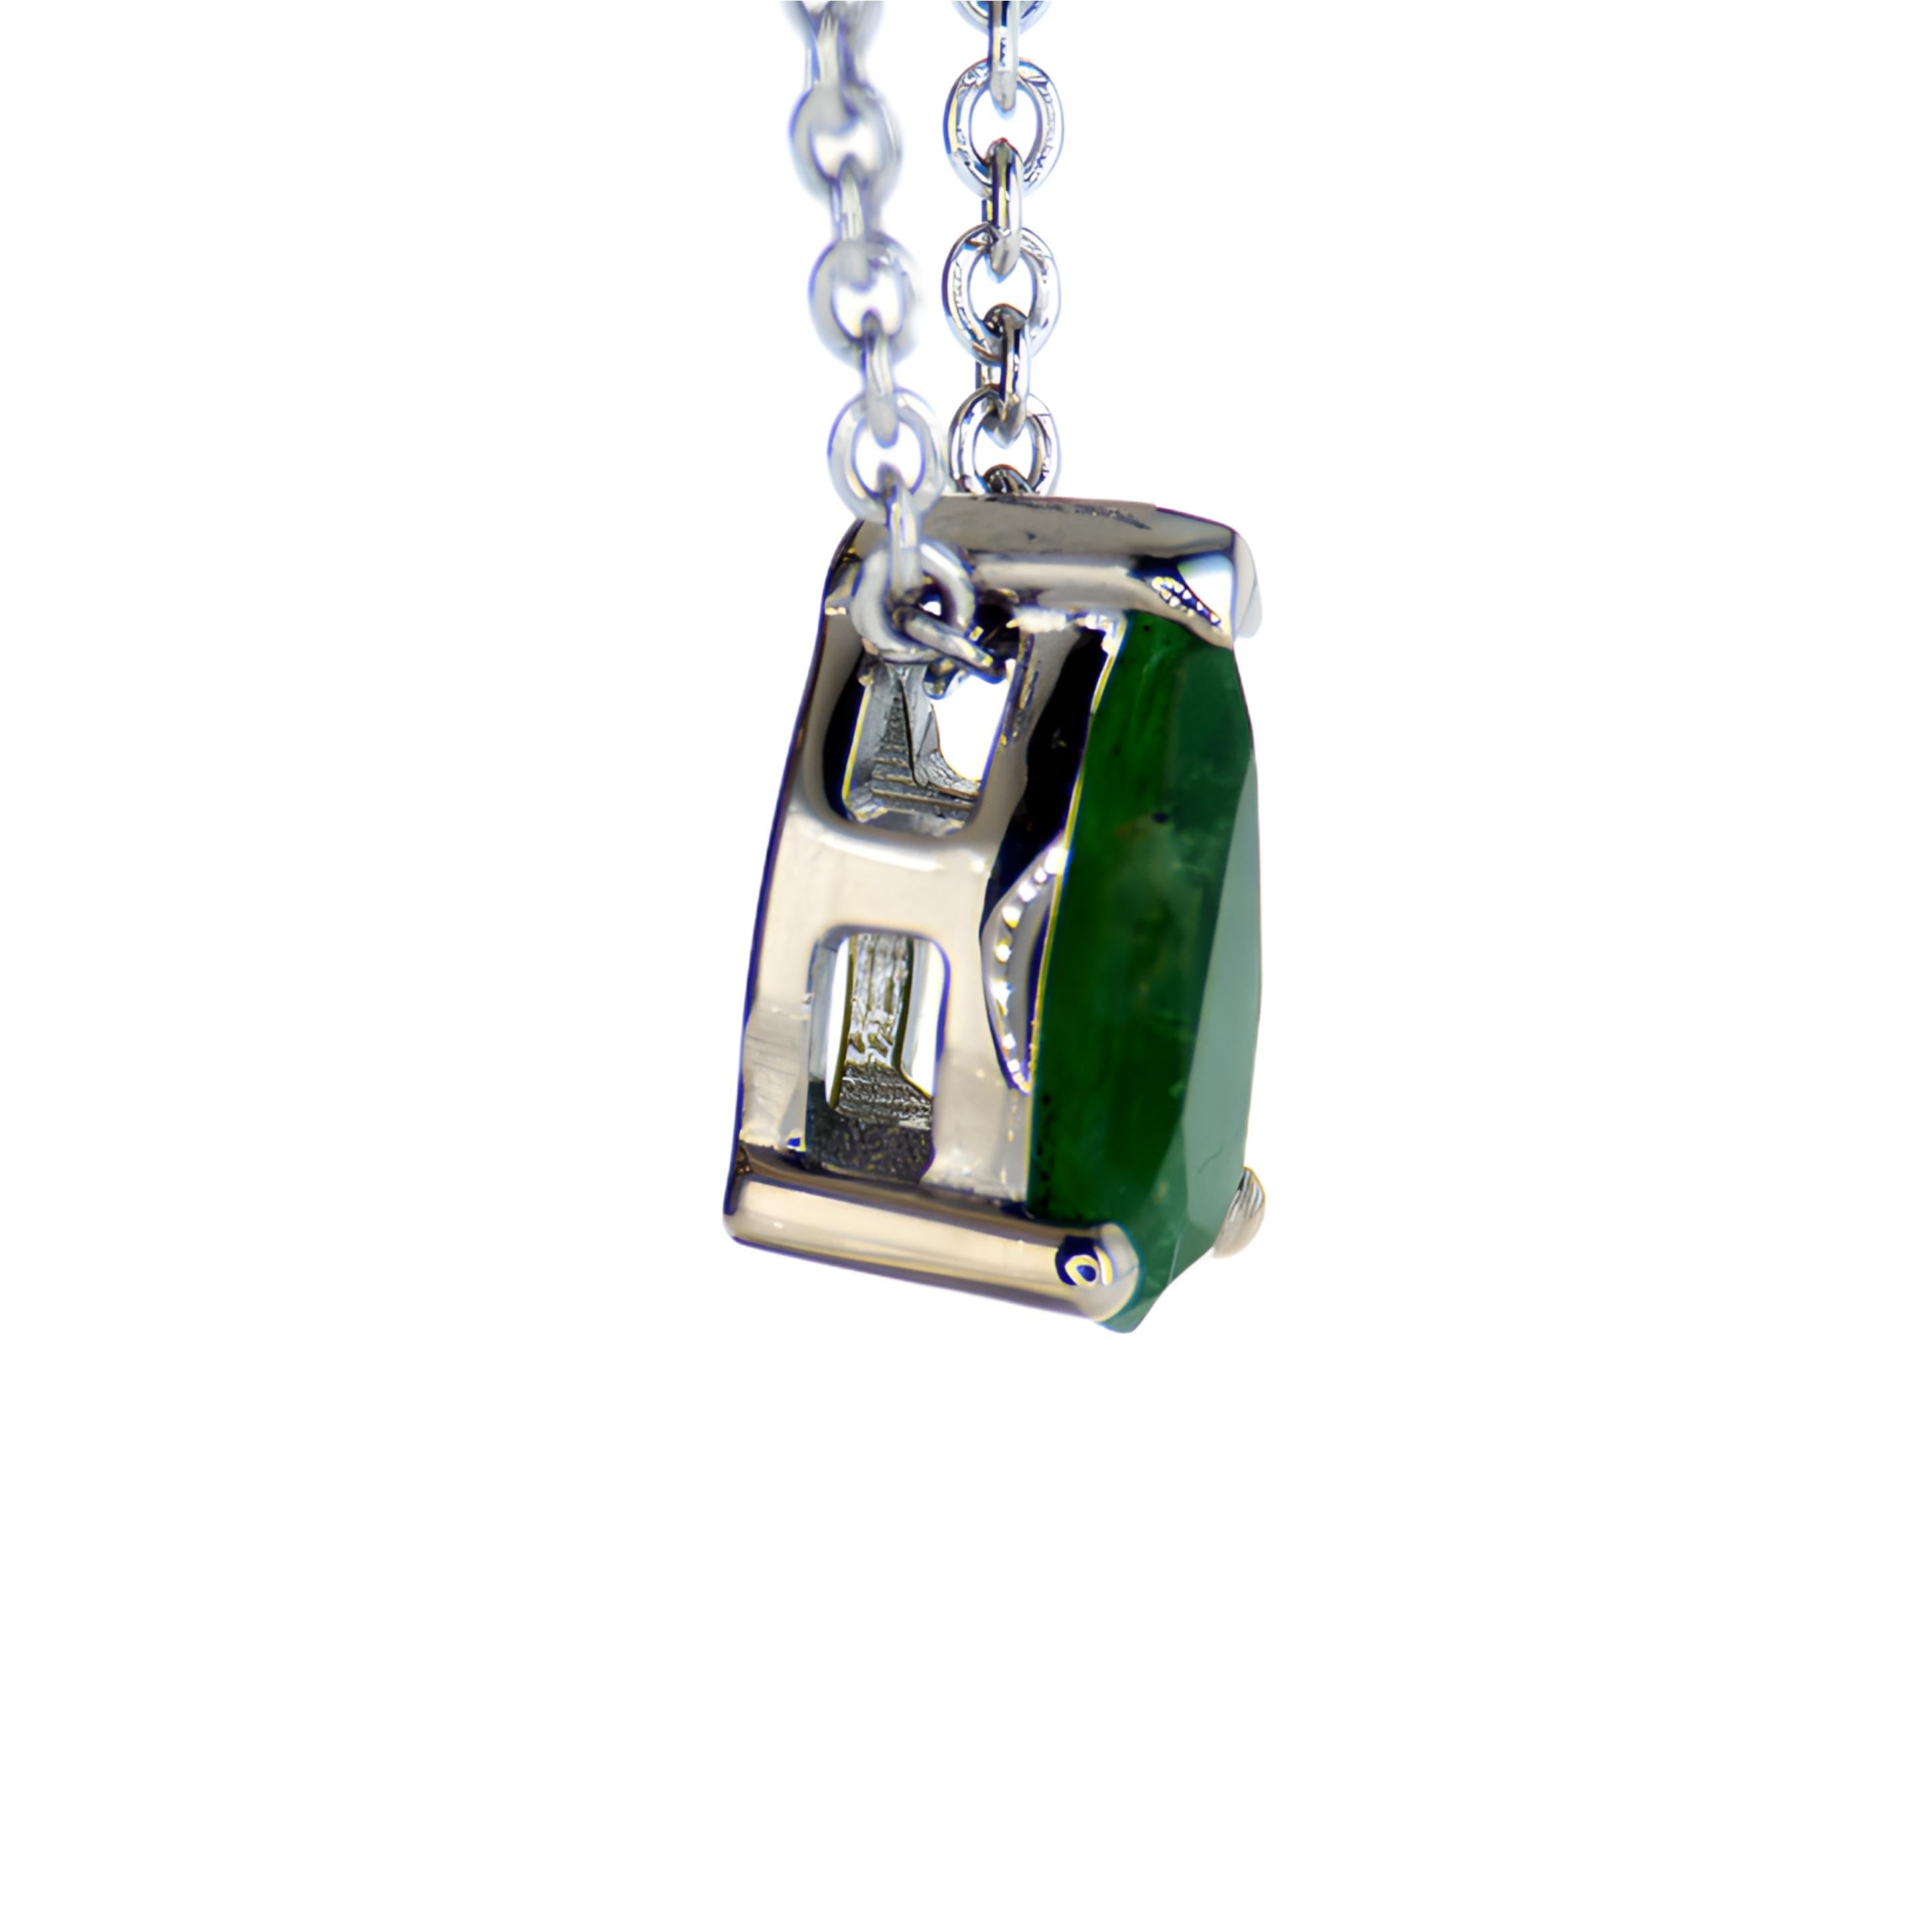 costco emerald necklace